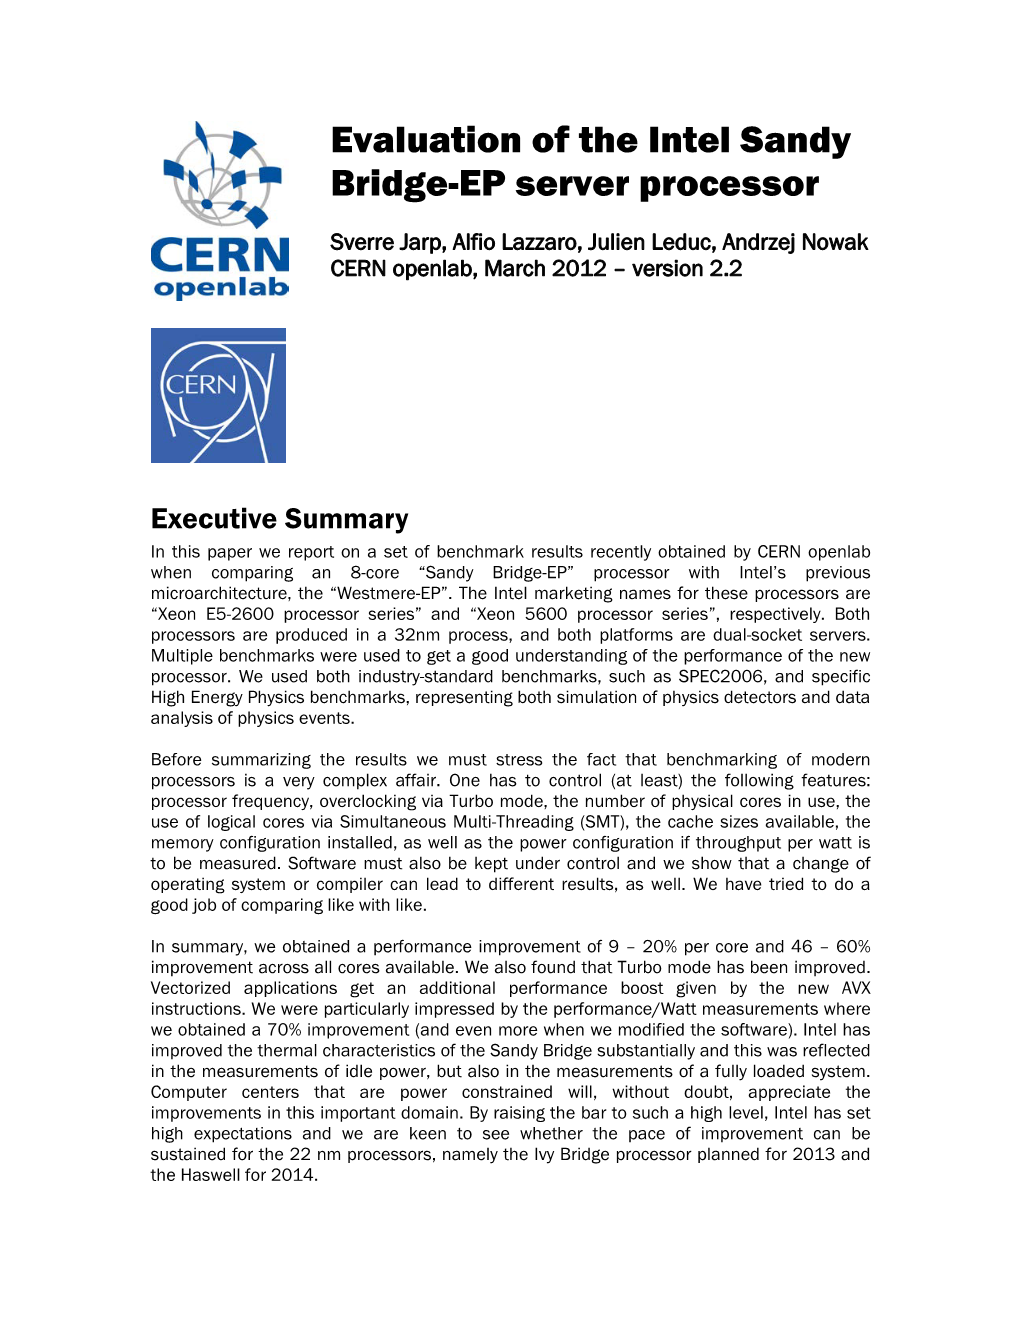 Evaluation of the Intel Sandy Bridge-EP Server Processor